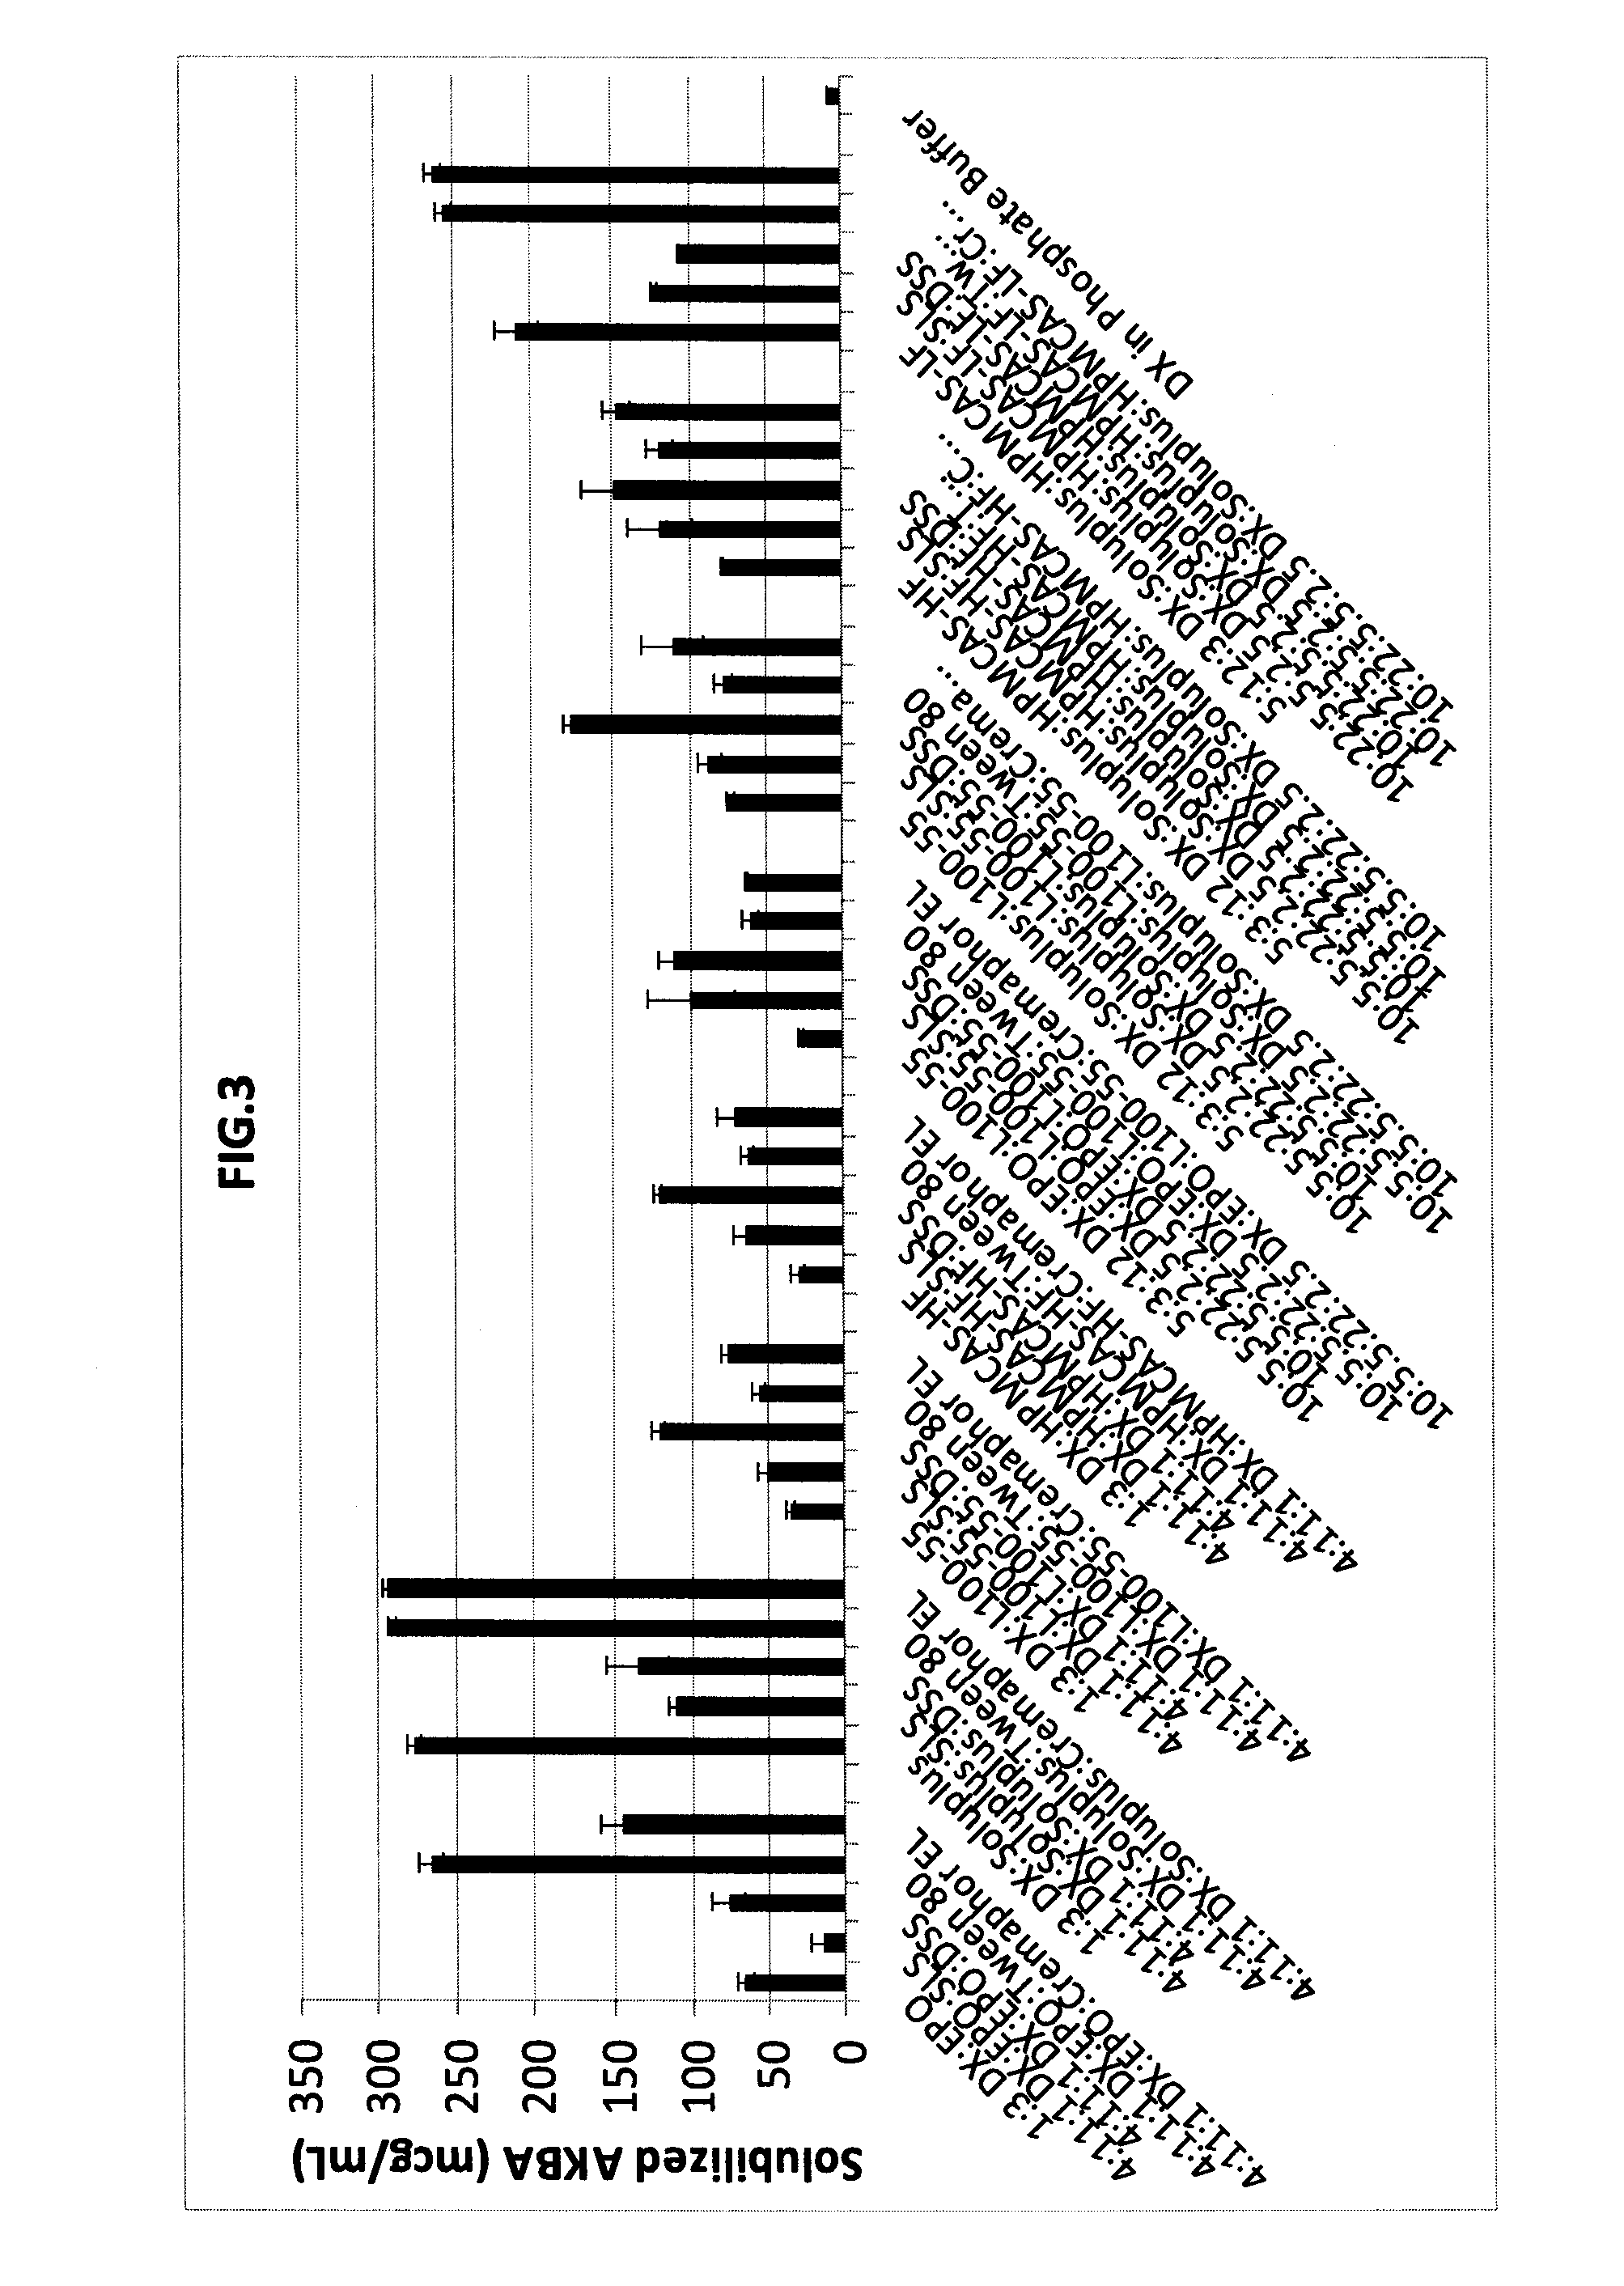 Pharmaceutical formulations of acetyl-11-keto-b-boswellic acid, diindolylmethane, and curcumin for pharmaceutical applications